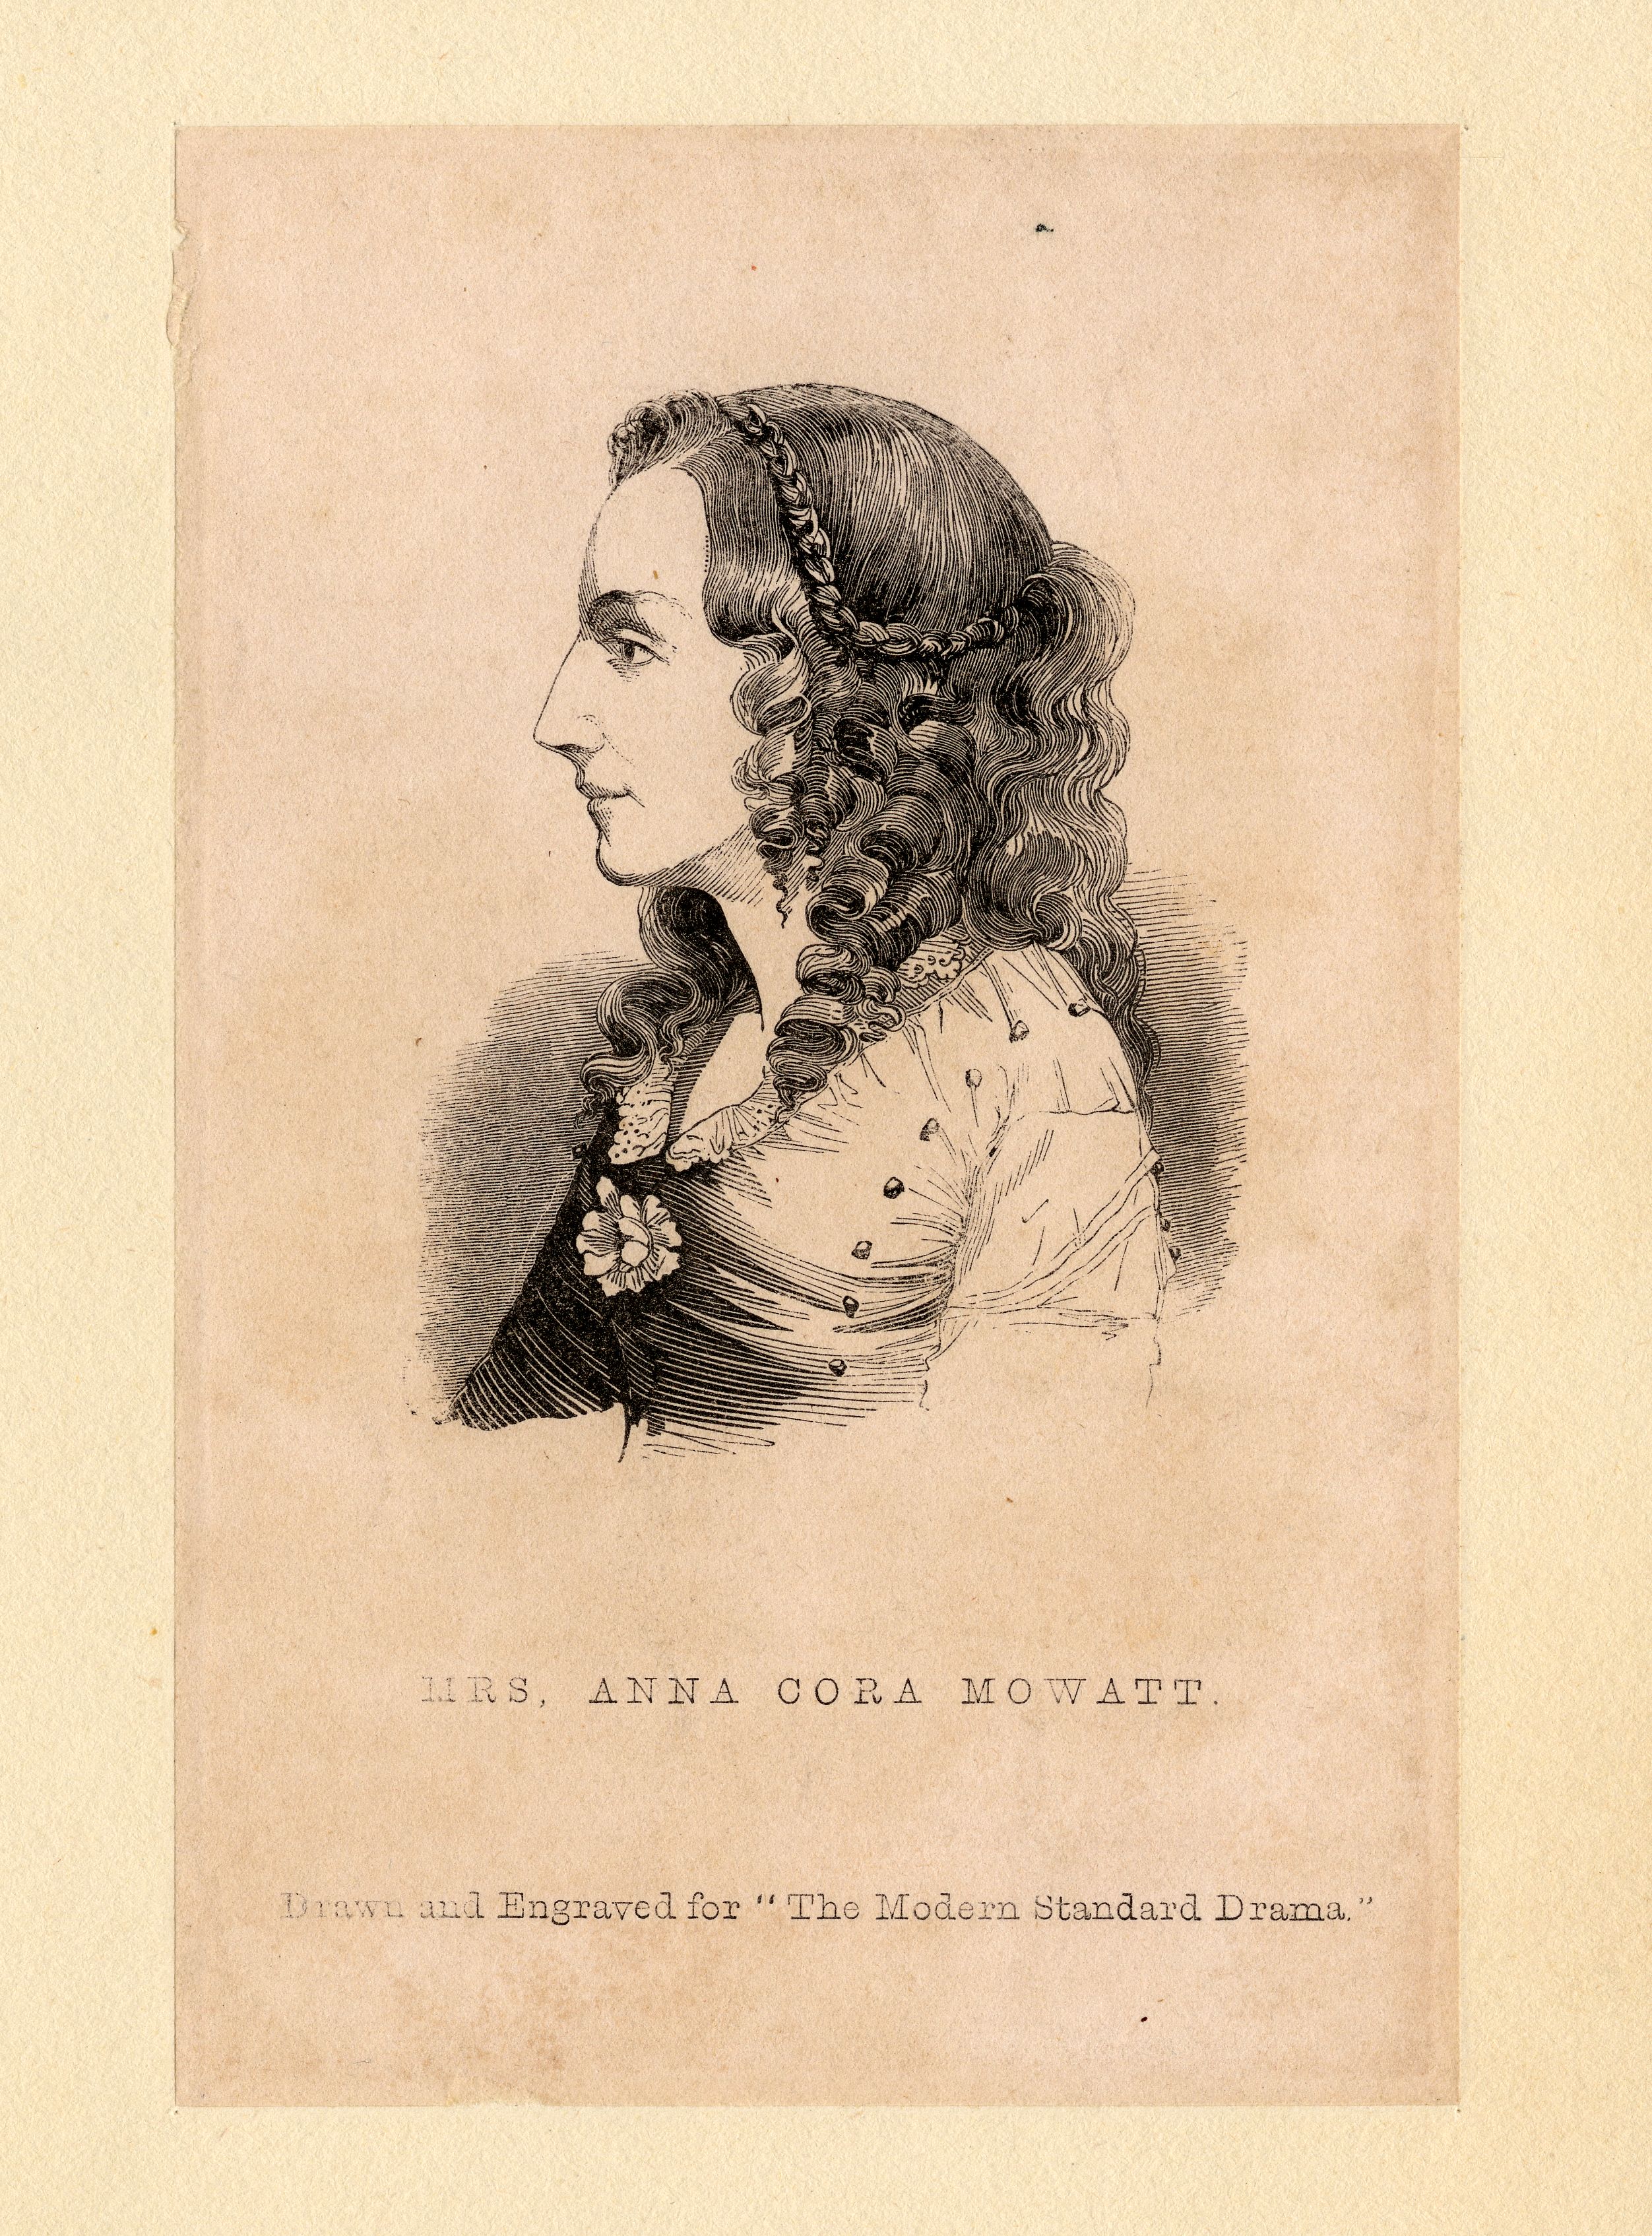 Book illustration of Anna Cora Mowatt